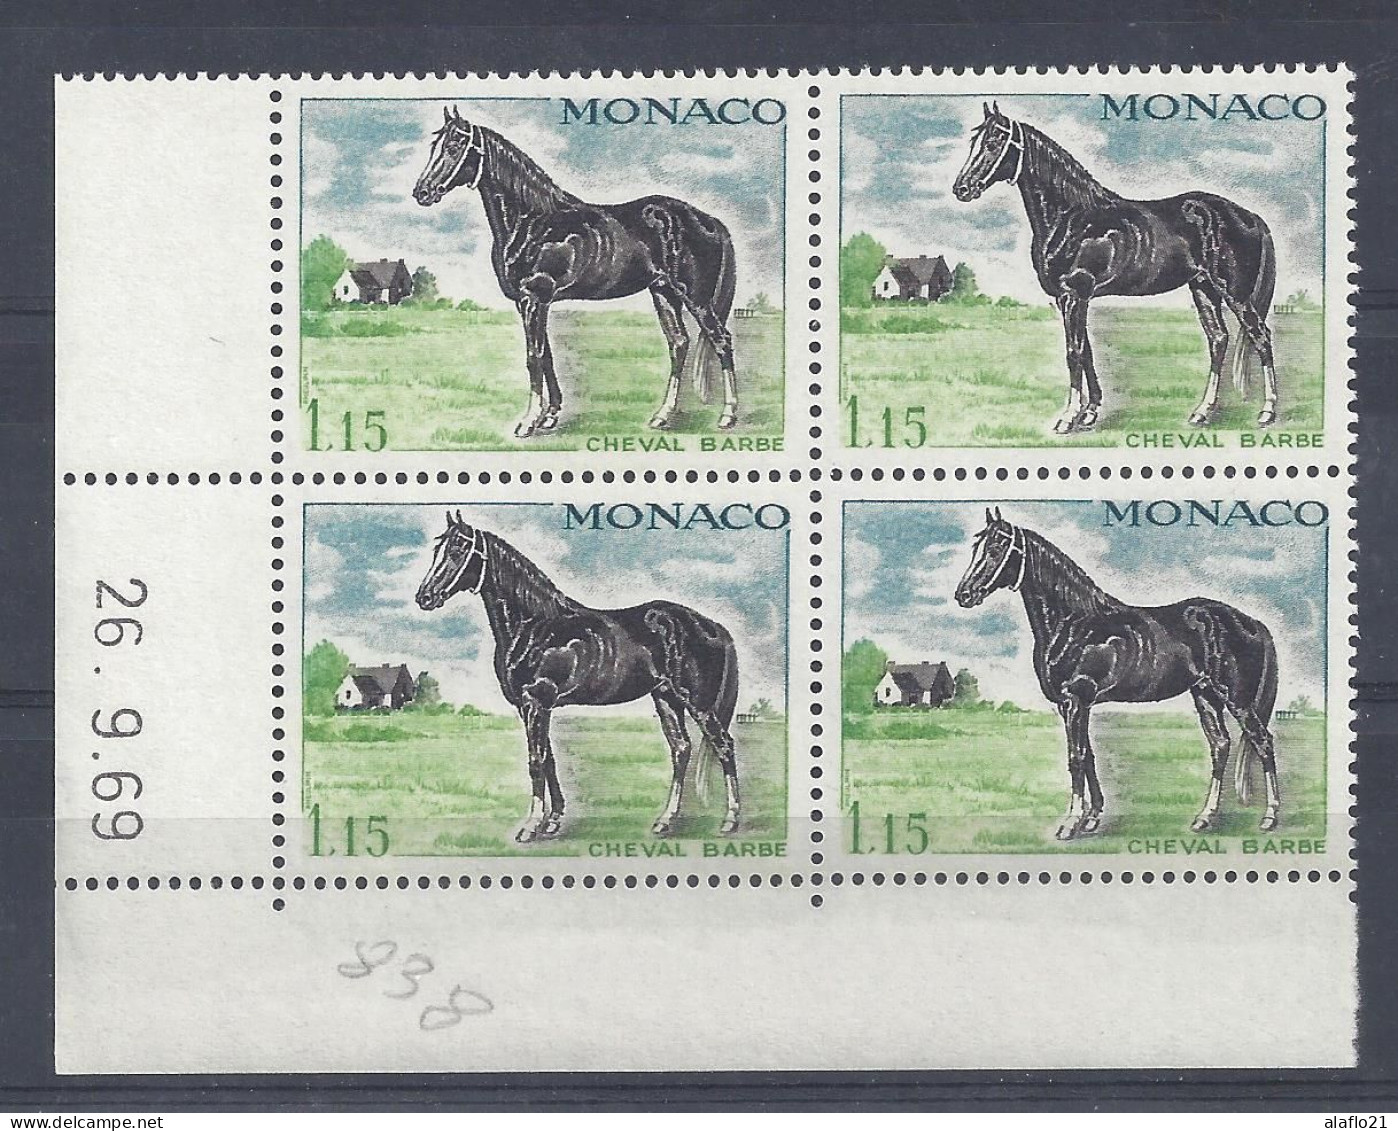 MONACO N° 838 - CHEVAL BARBE - BLOC De 4 COIN DATE - NEUF SANS CHARNIERE - 26/9/69 - Unused Stamps